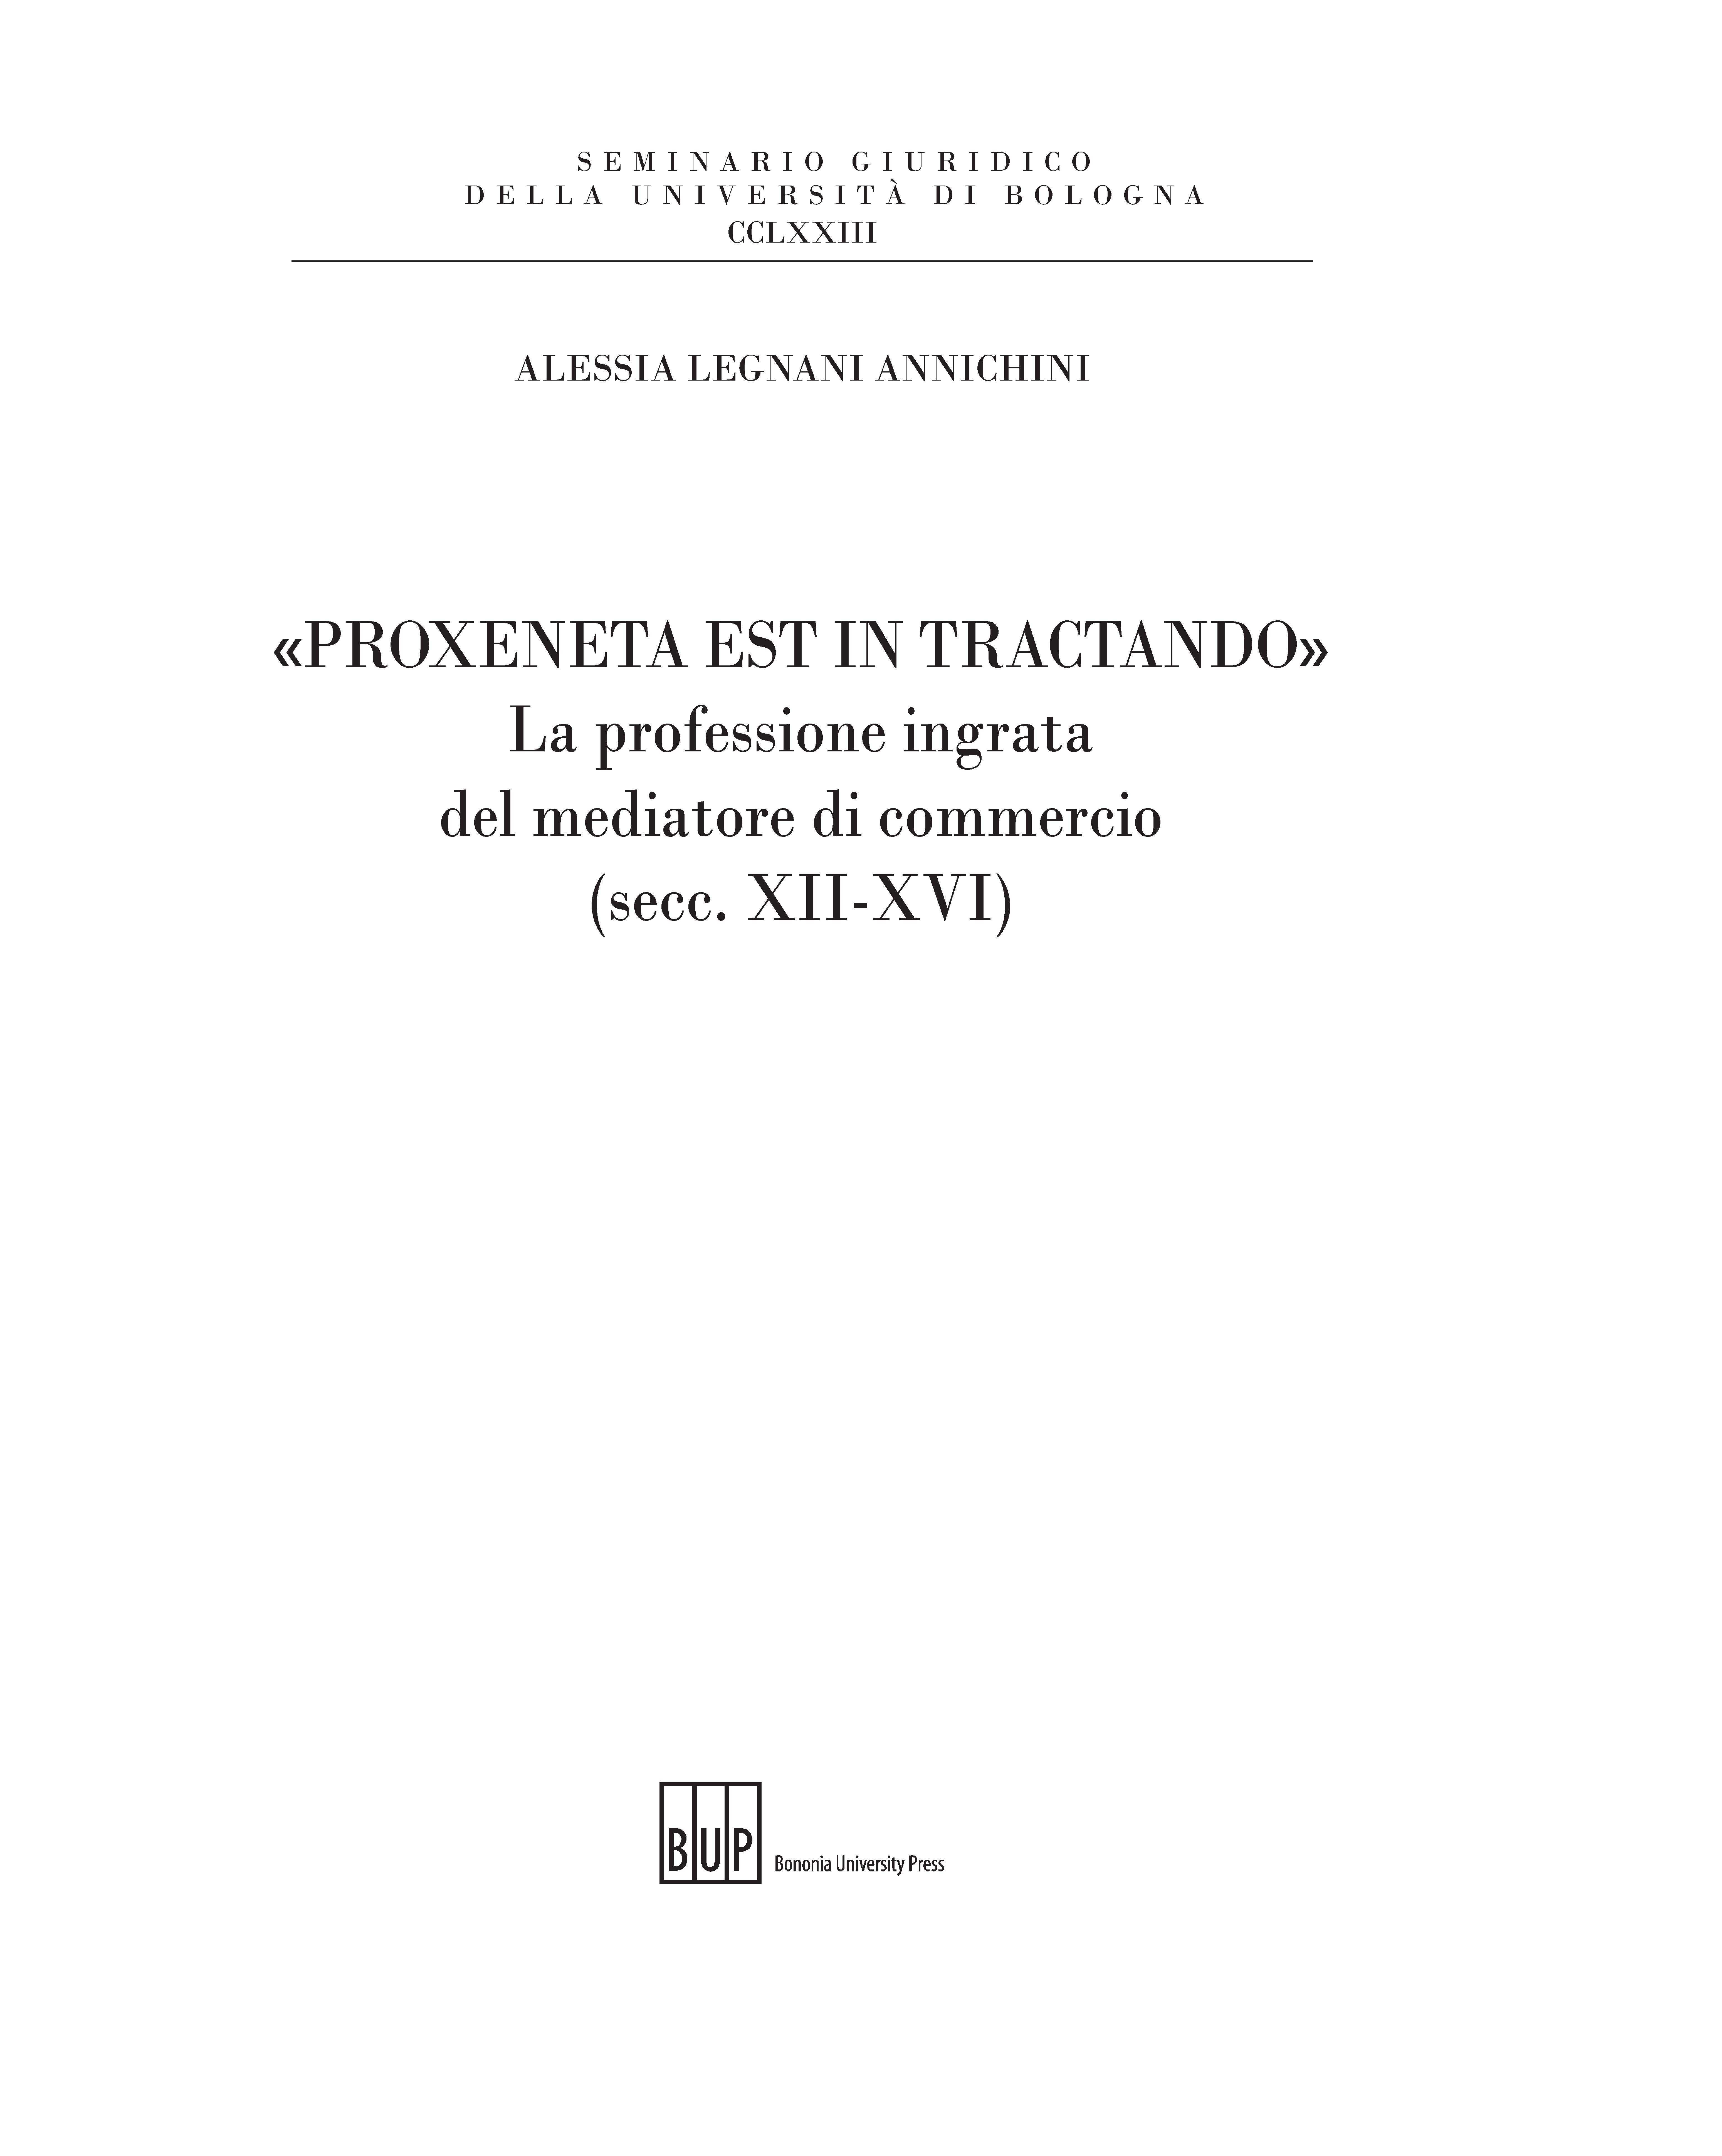 «Proxeneta est in tractando» - Bologna University Press